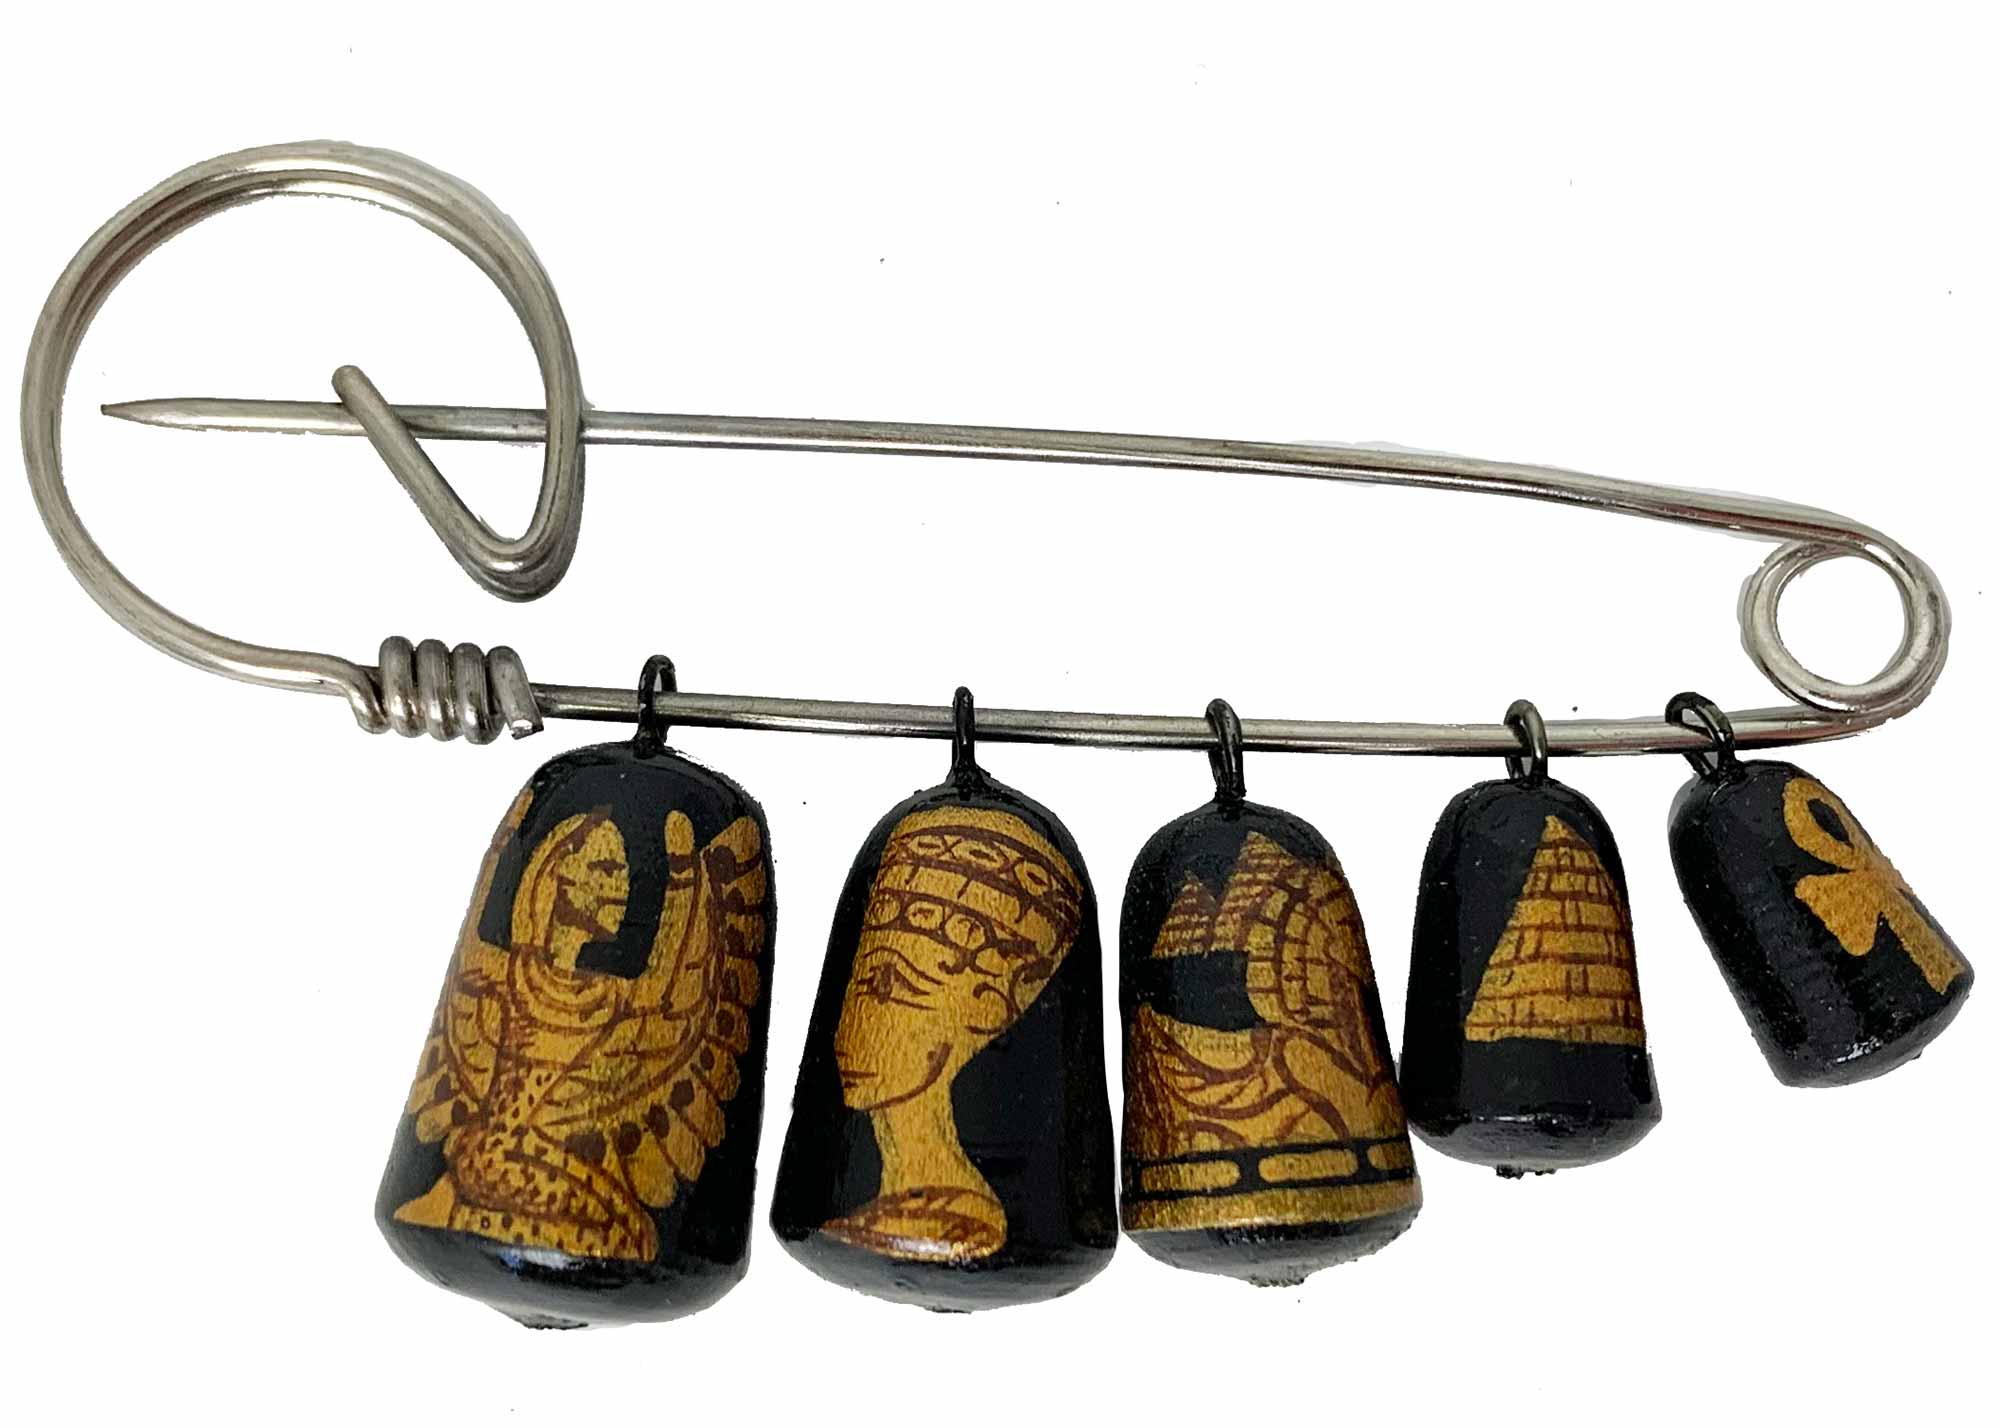 Buy Vintage Egyptian Themed Lapel Pin at GoldenCockerel.com